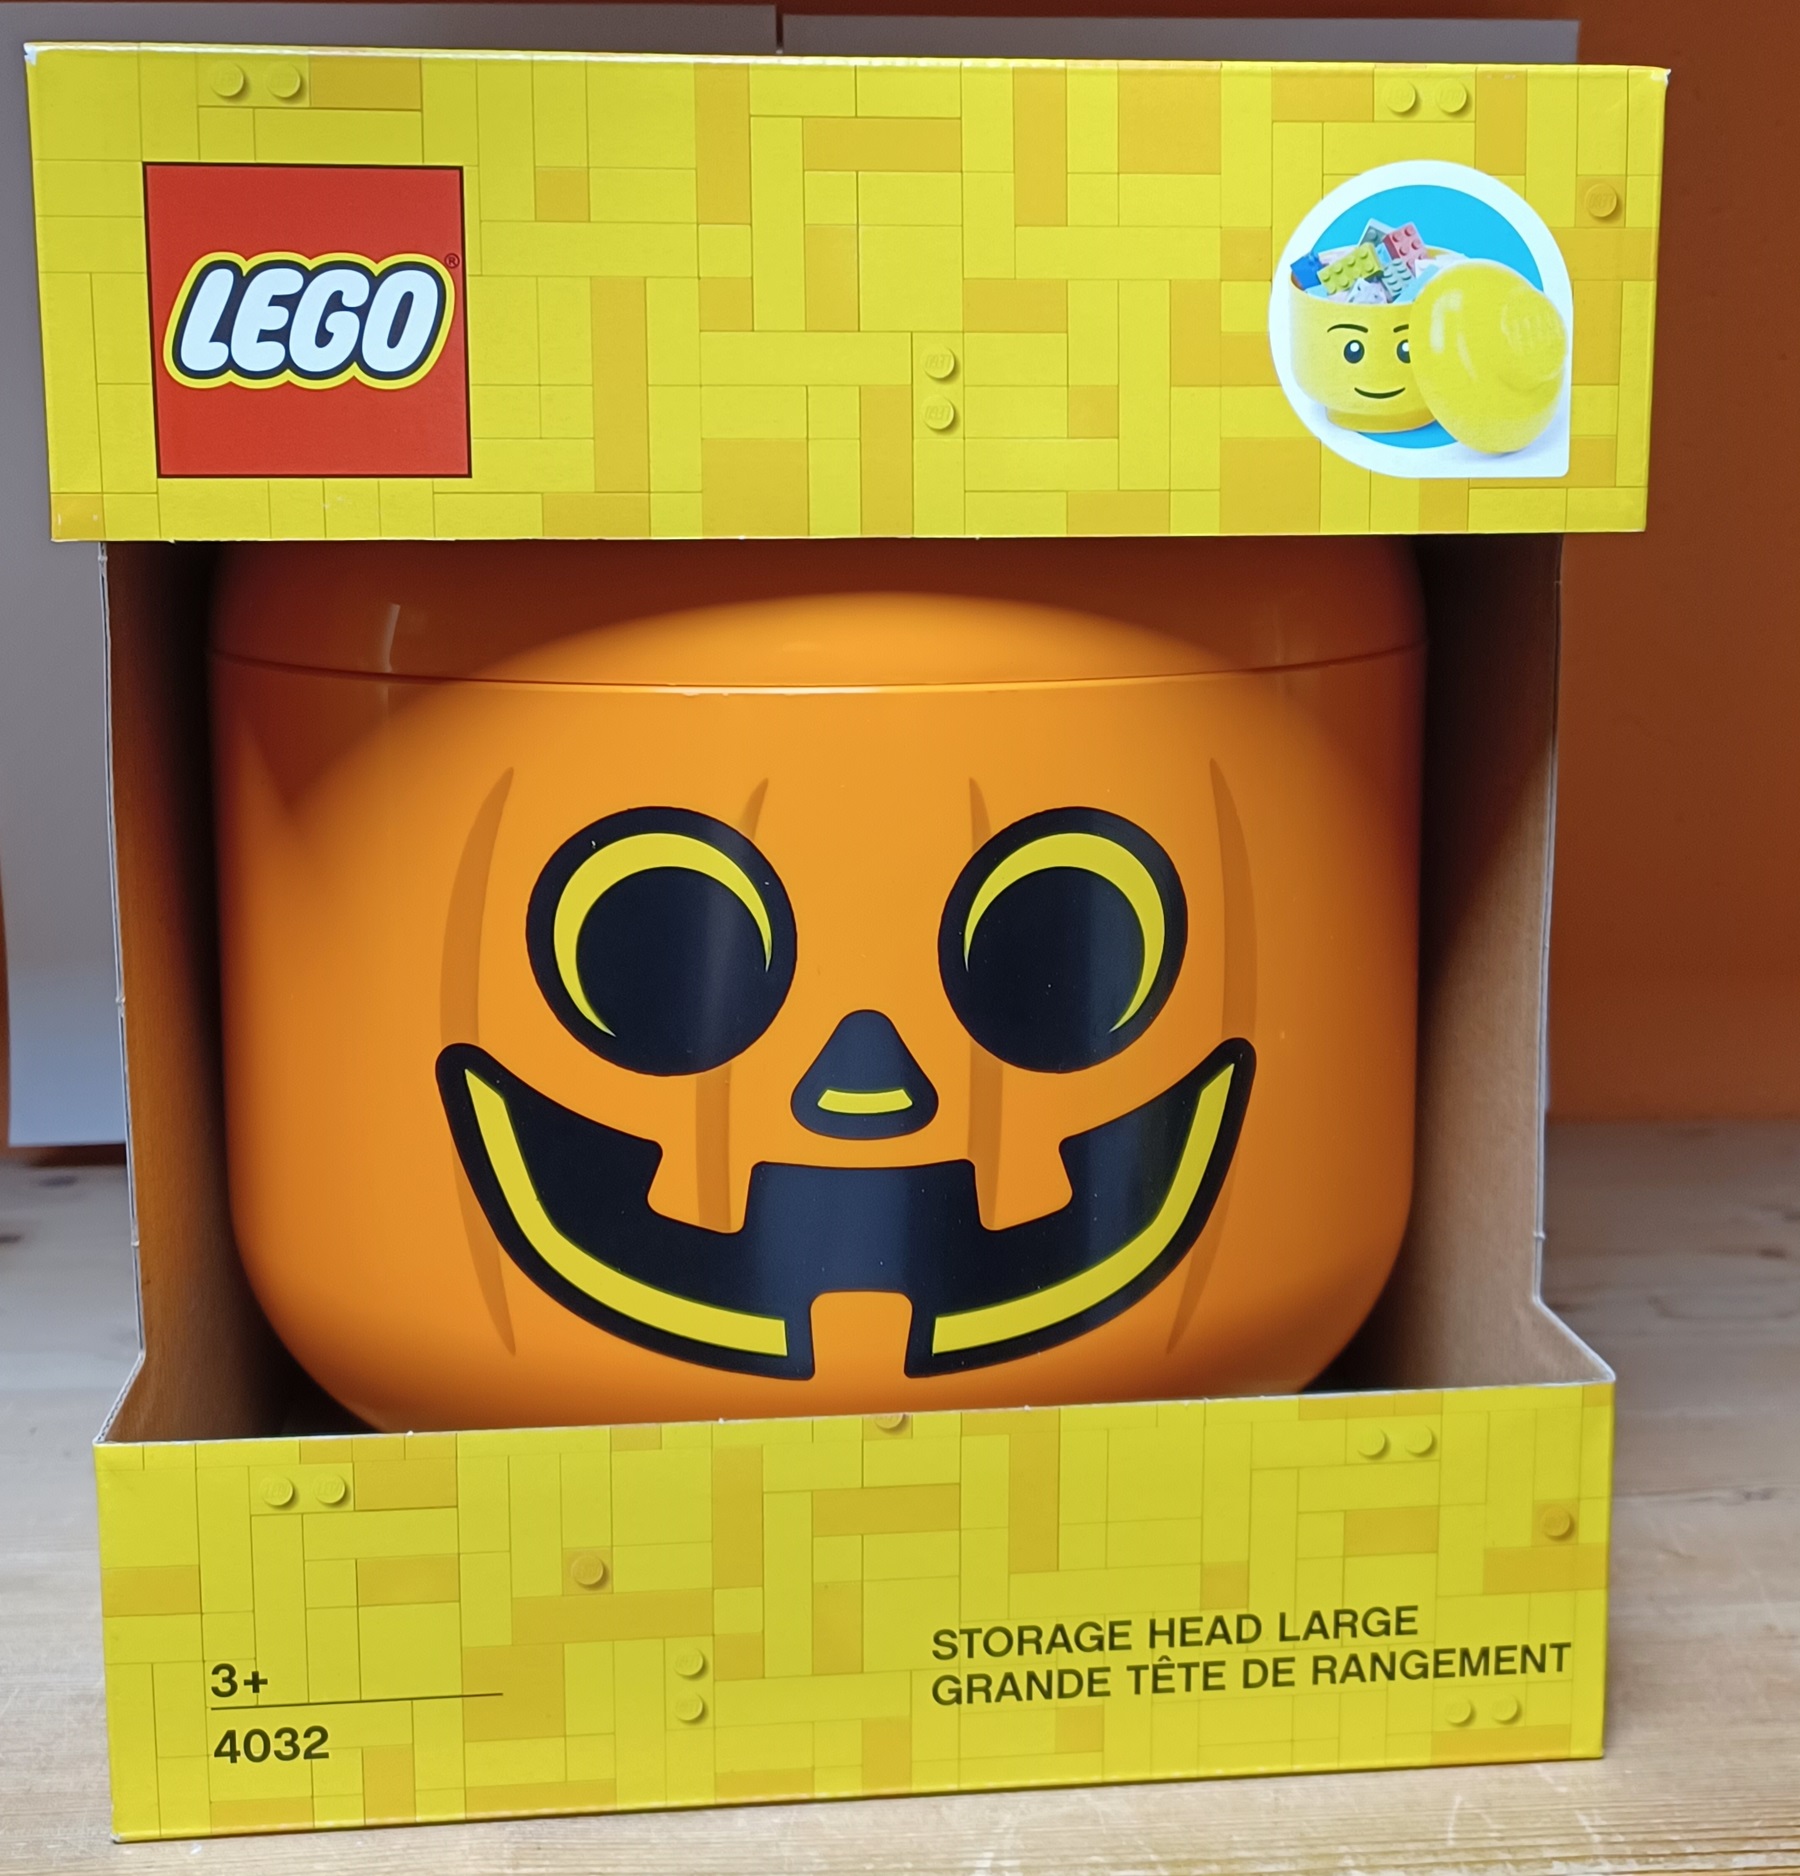 0020 Lego opbevarings hoved